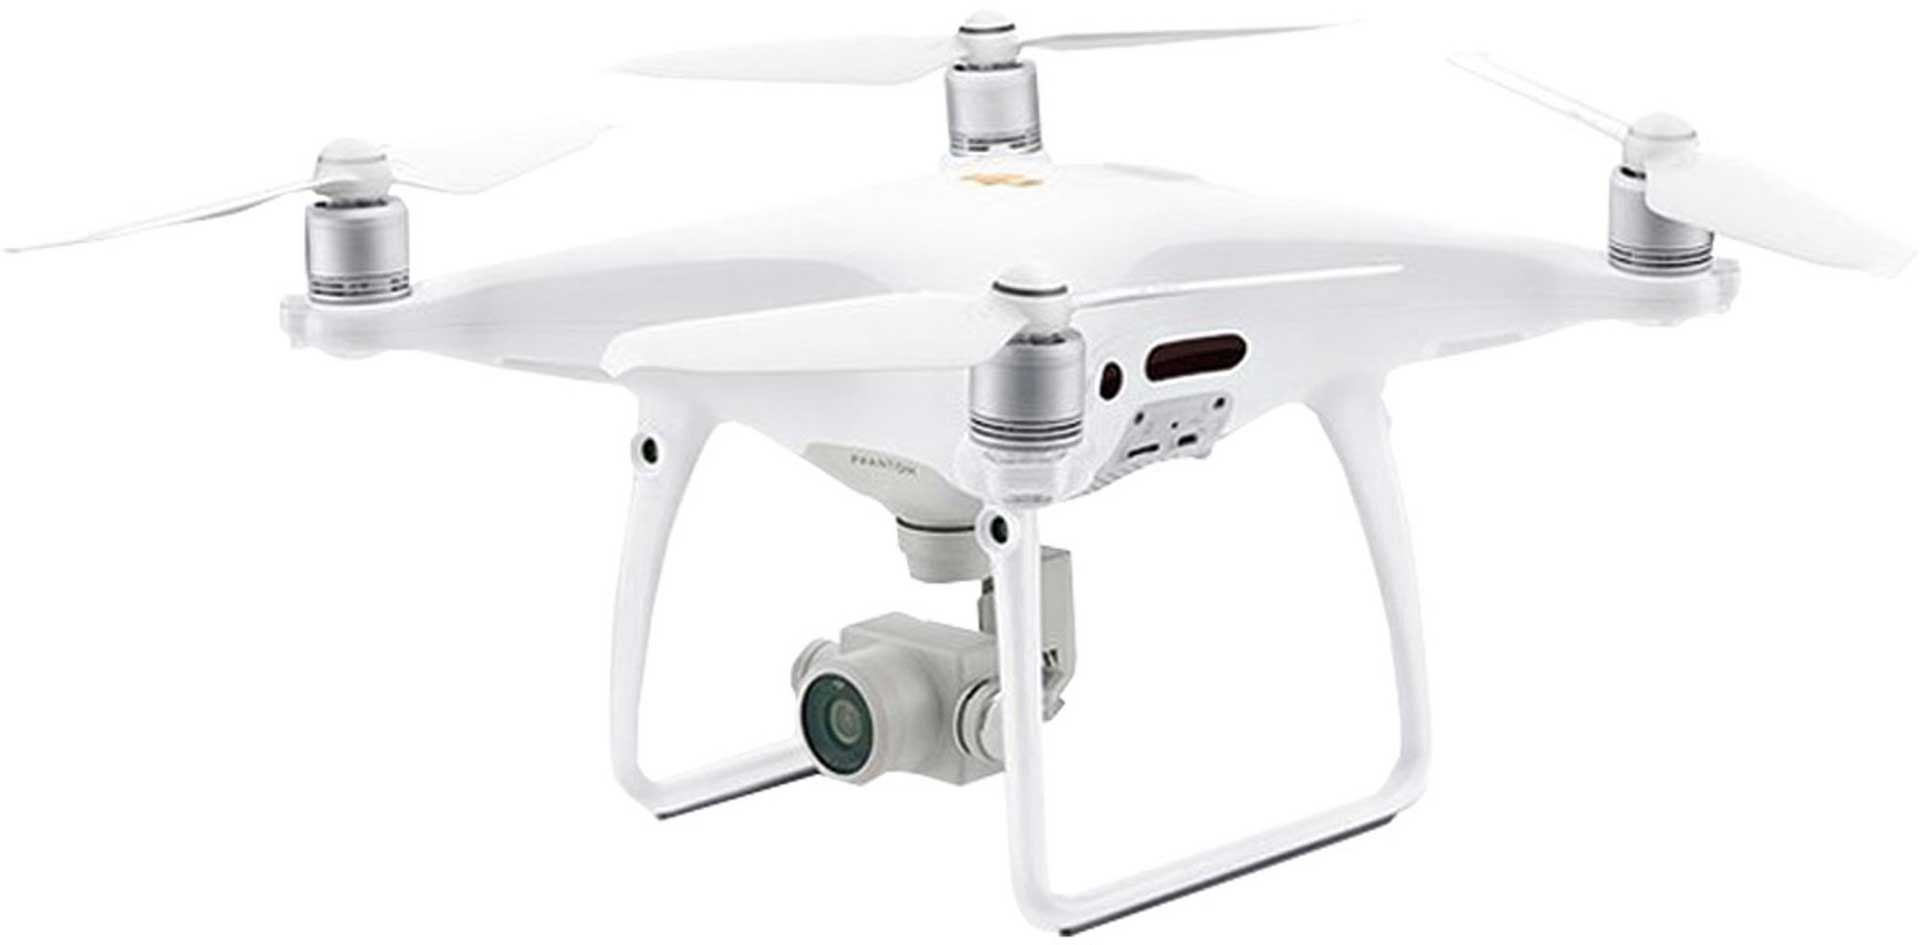 DJI PHANTOM 4 PRO VERSION 2.0 drone